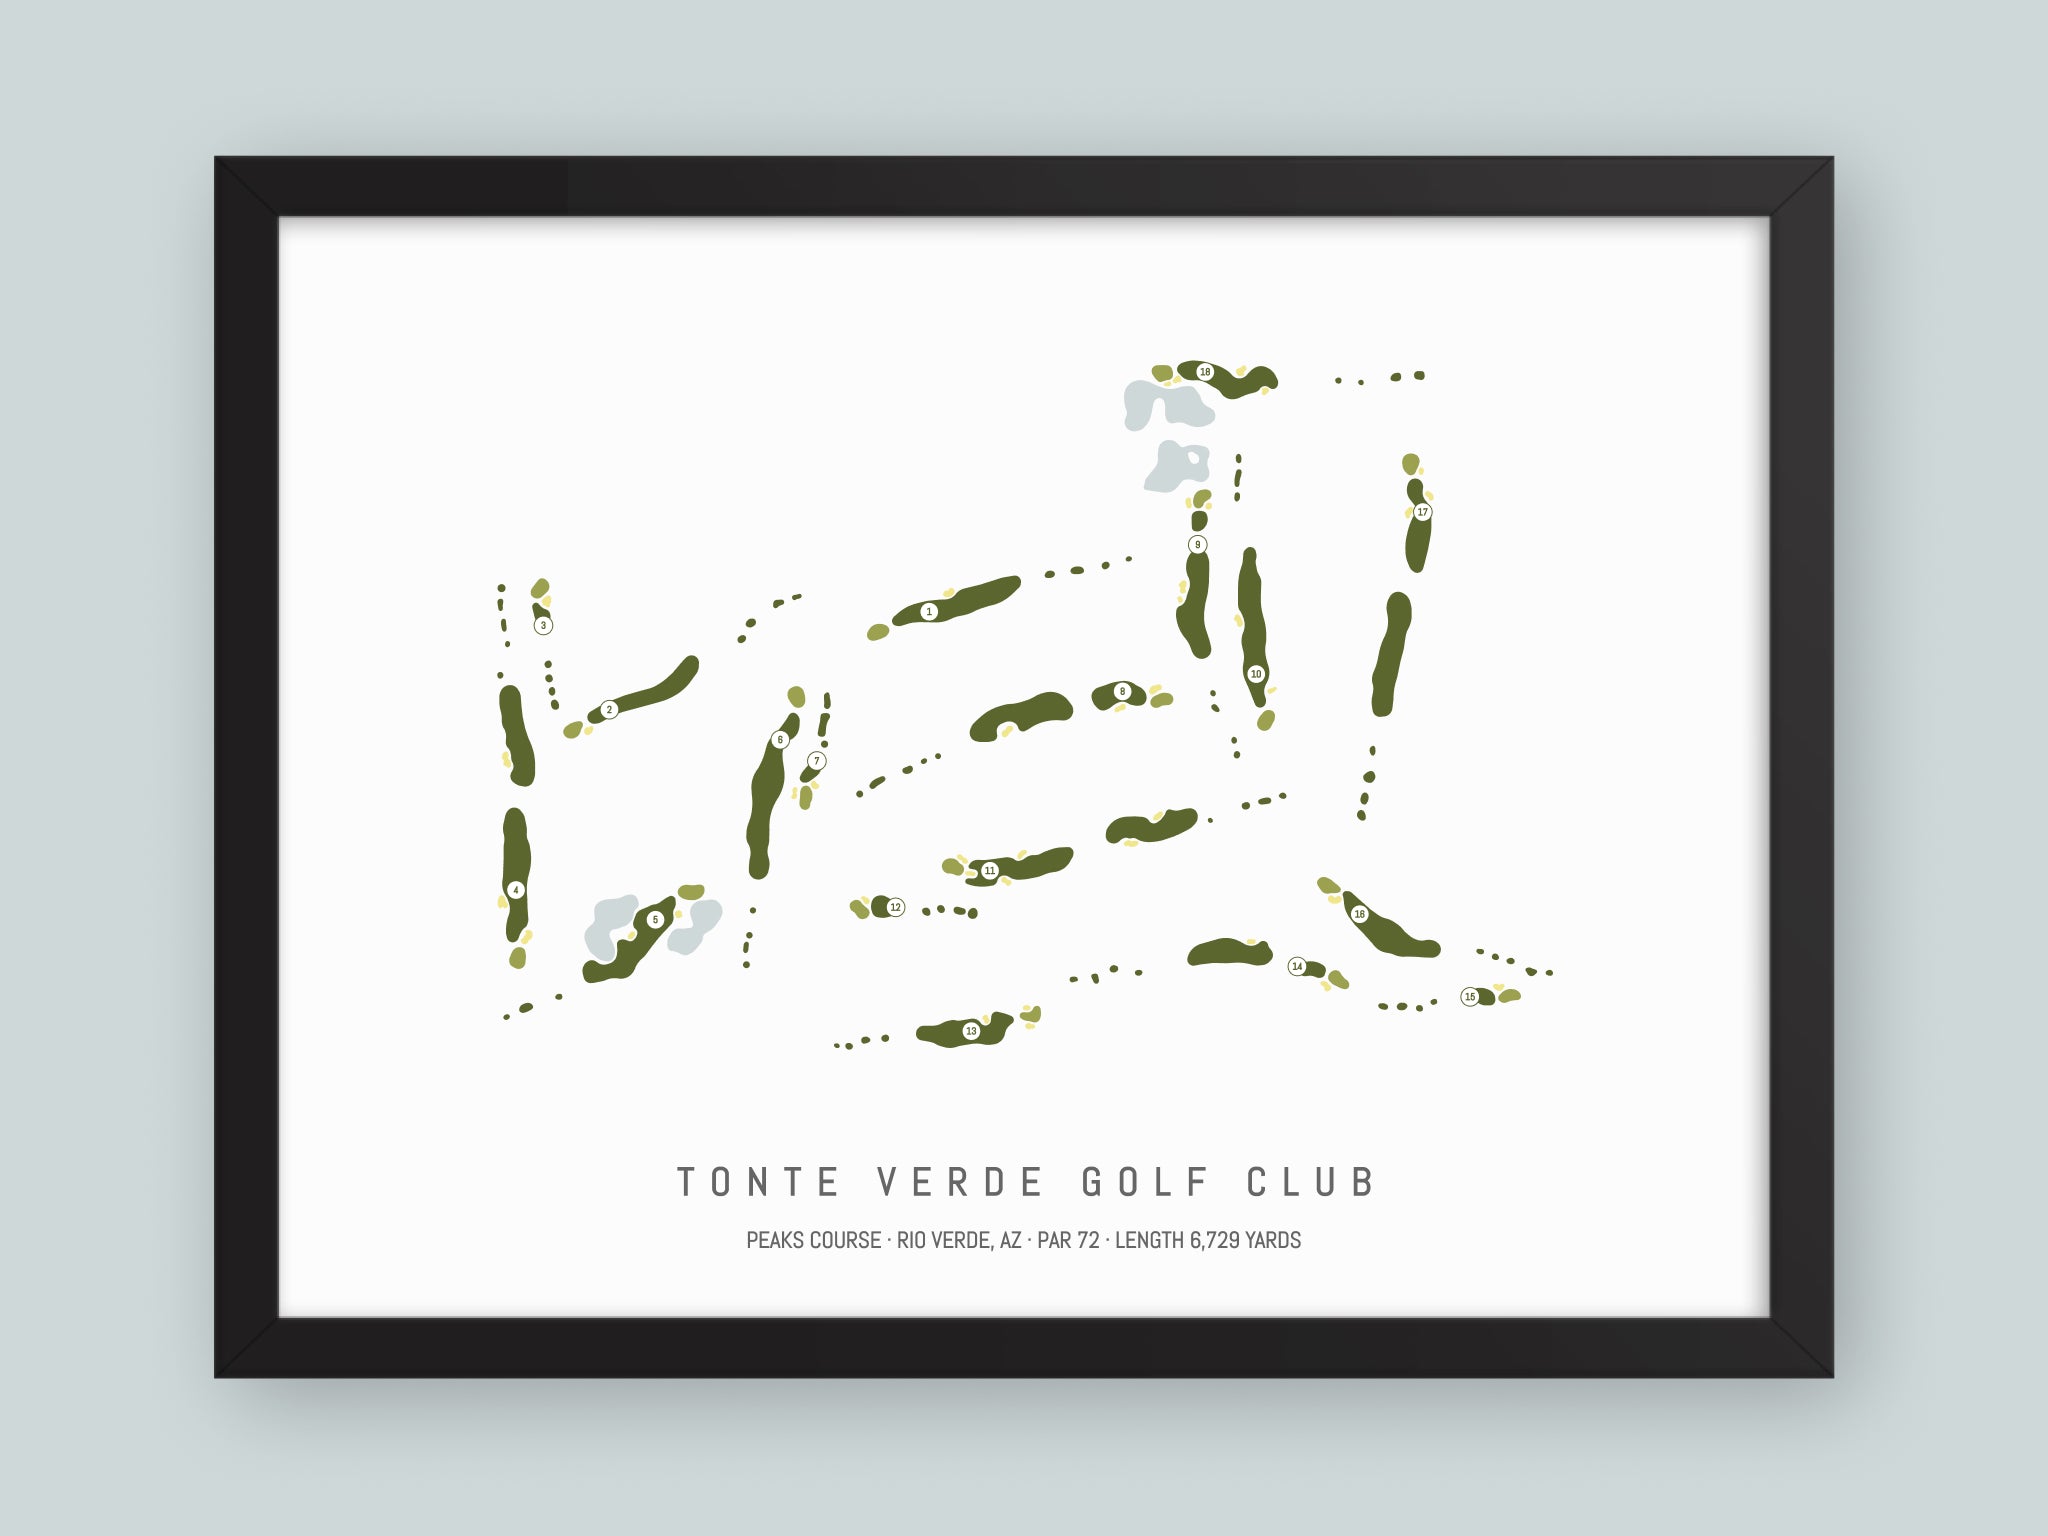 Tonto Verde Golf Club - Peaks Course